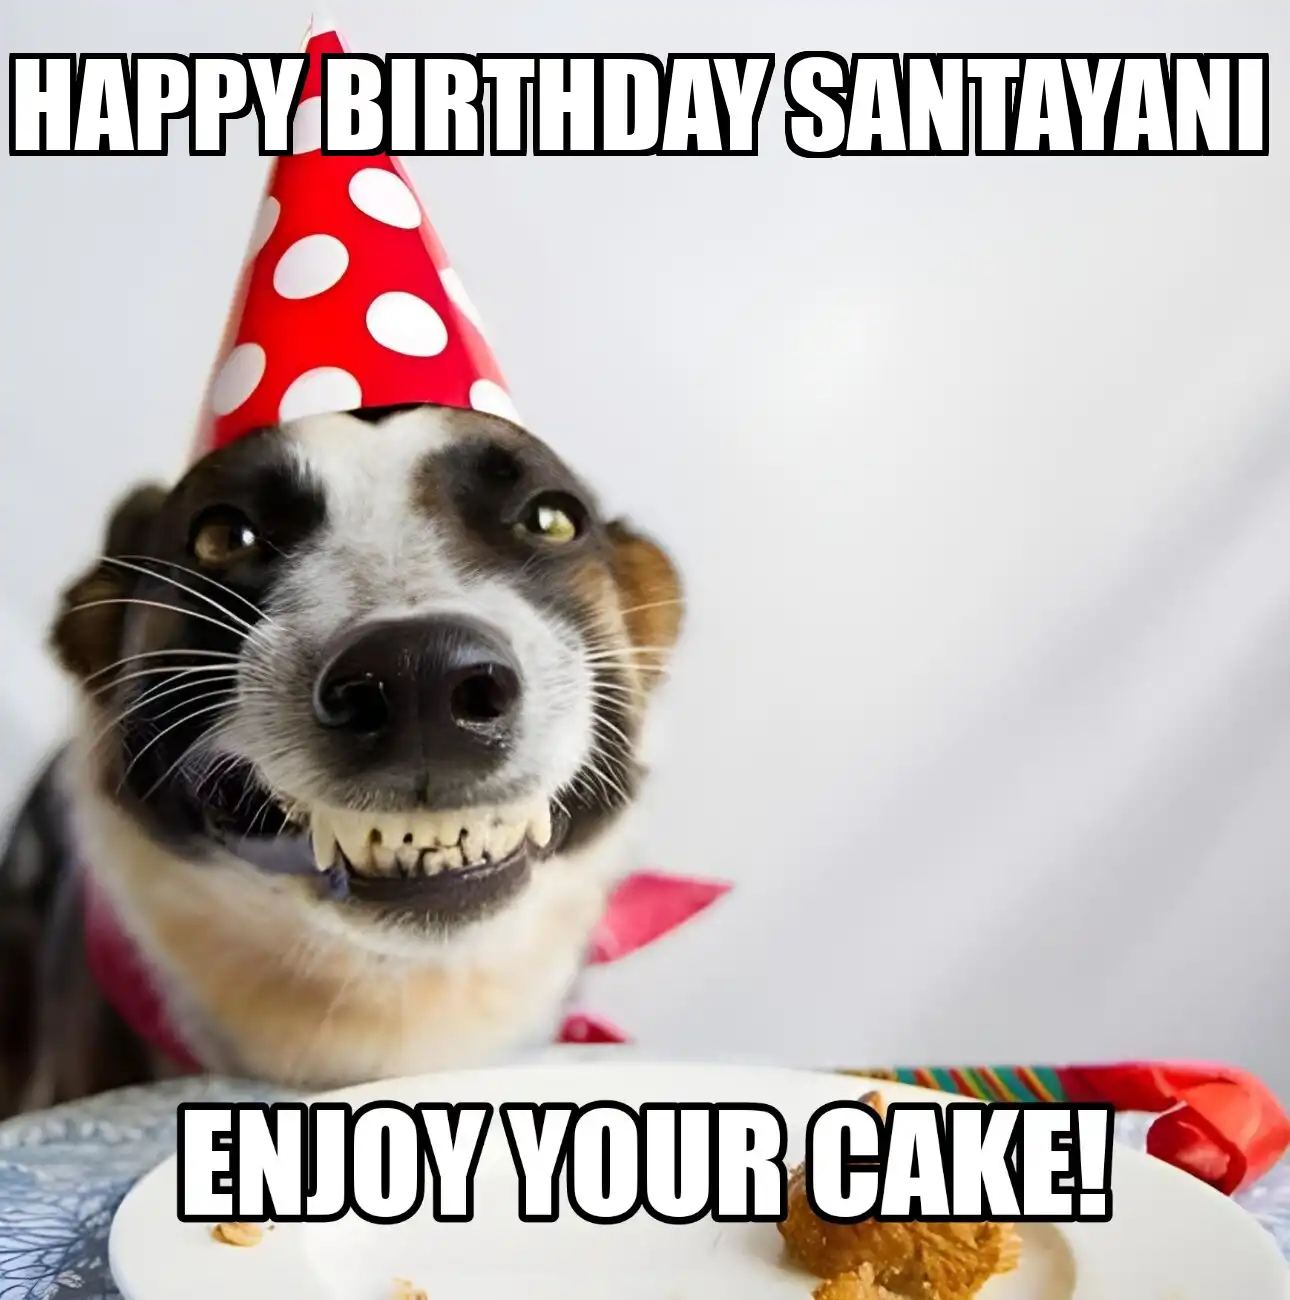 Happy Birthday Santayani Enjoy Your Cake Dog Meme